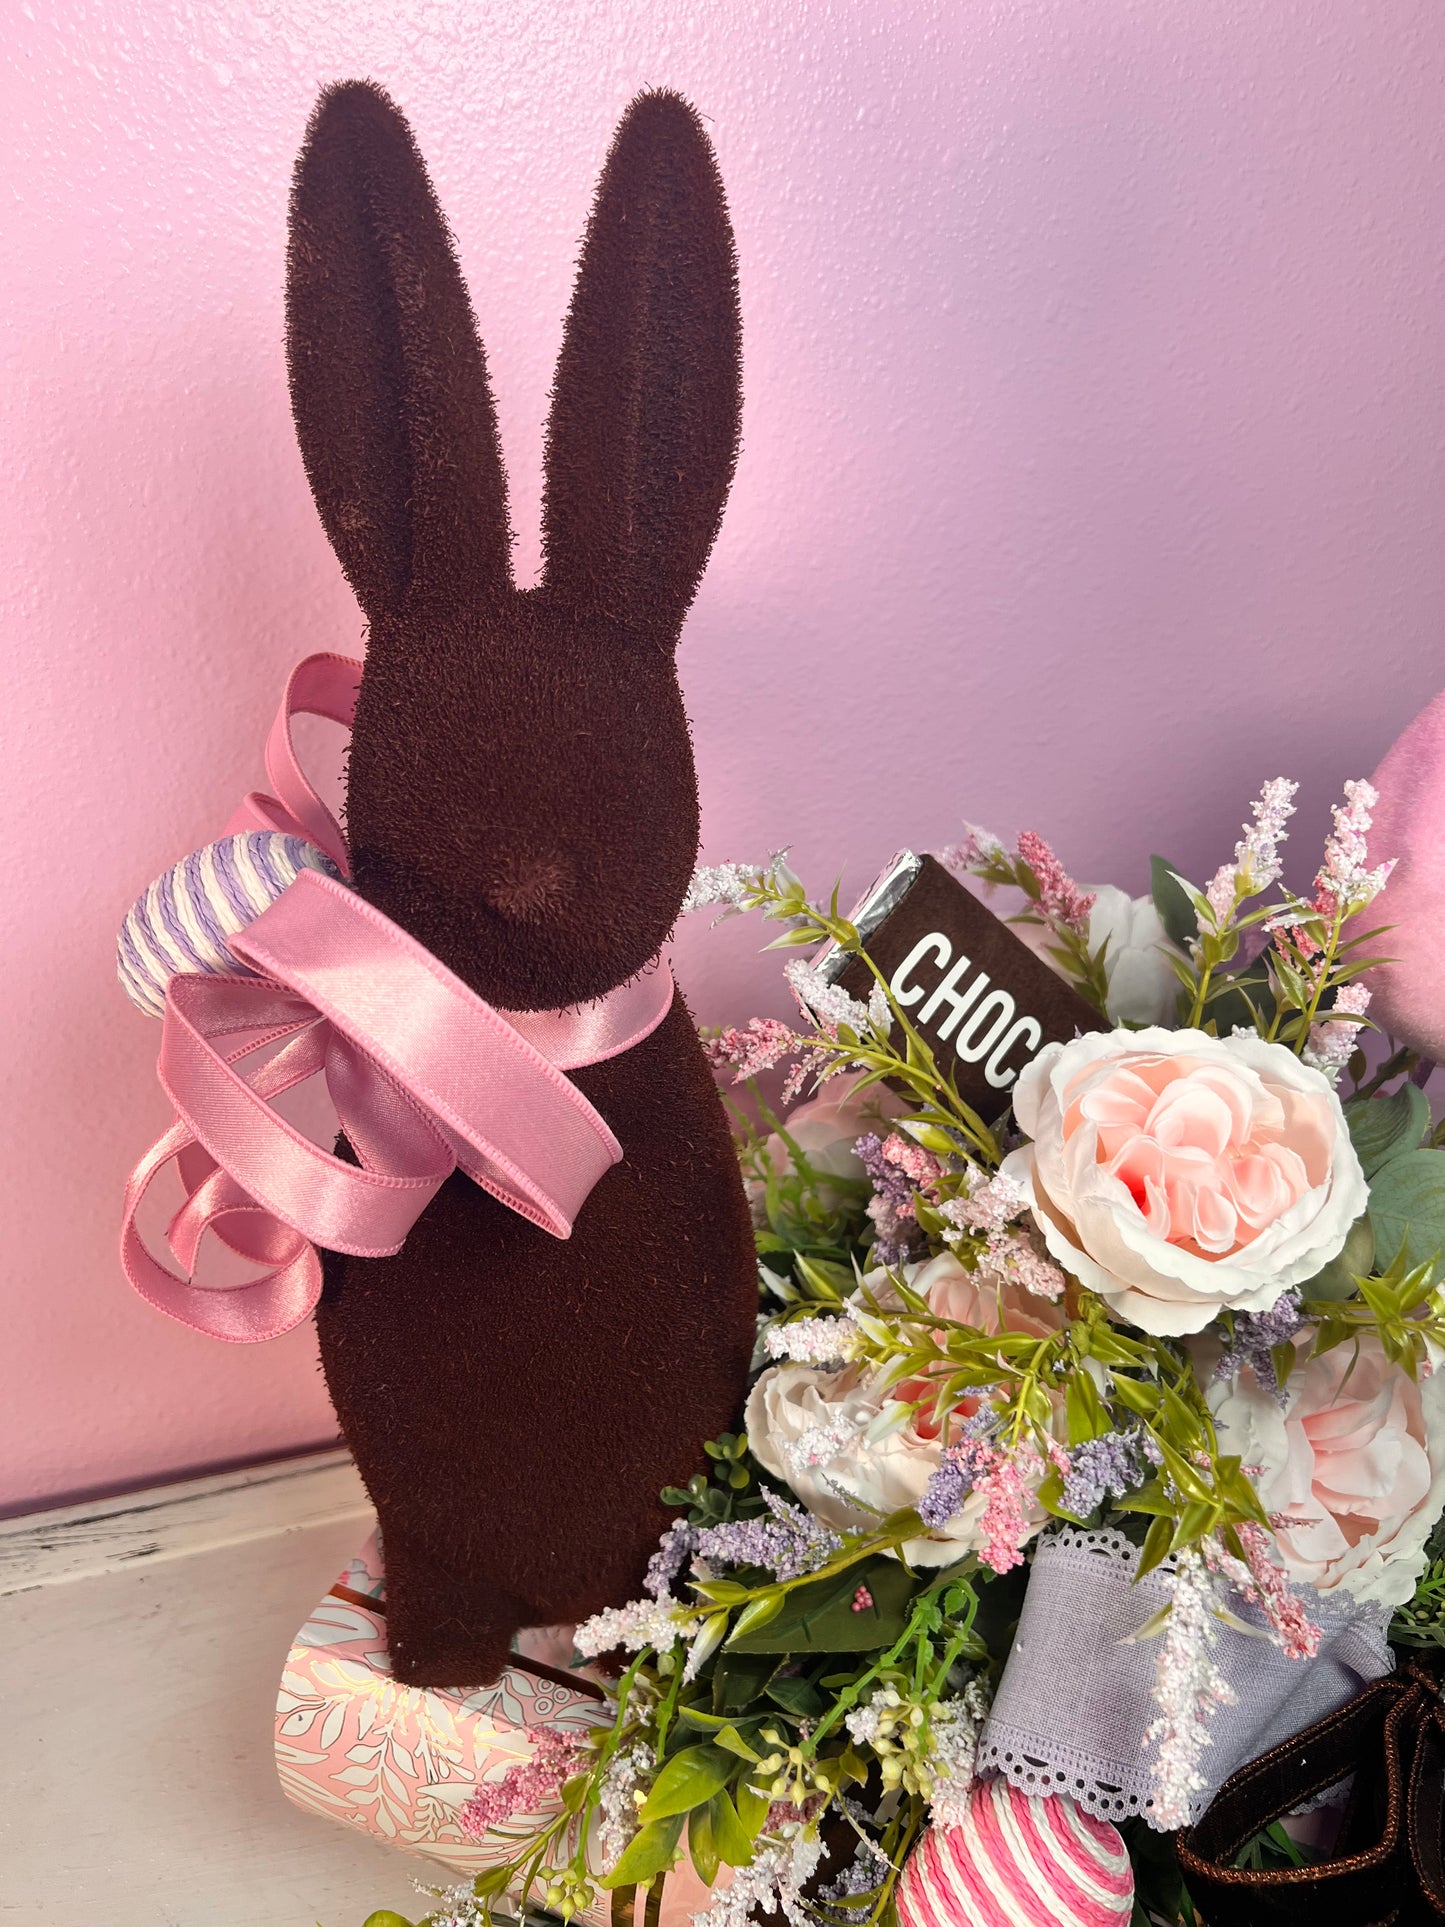 Chocolate Bunny Centerpiece